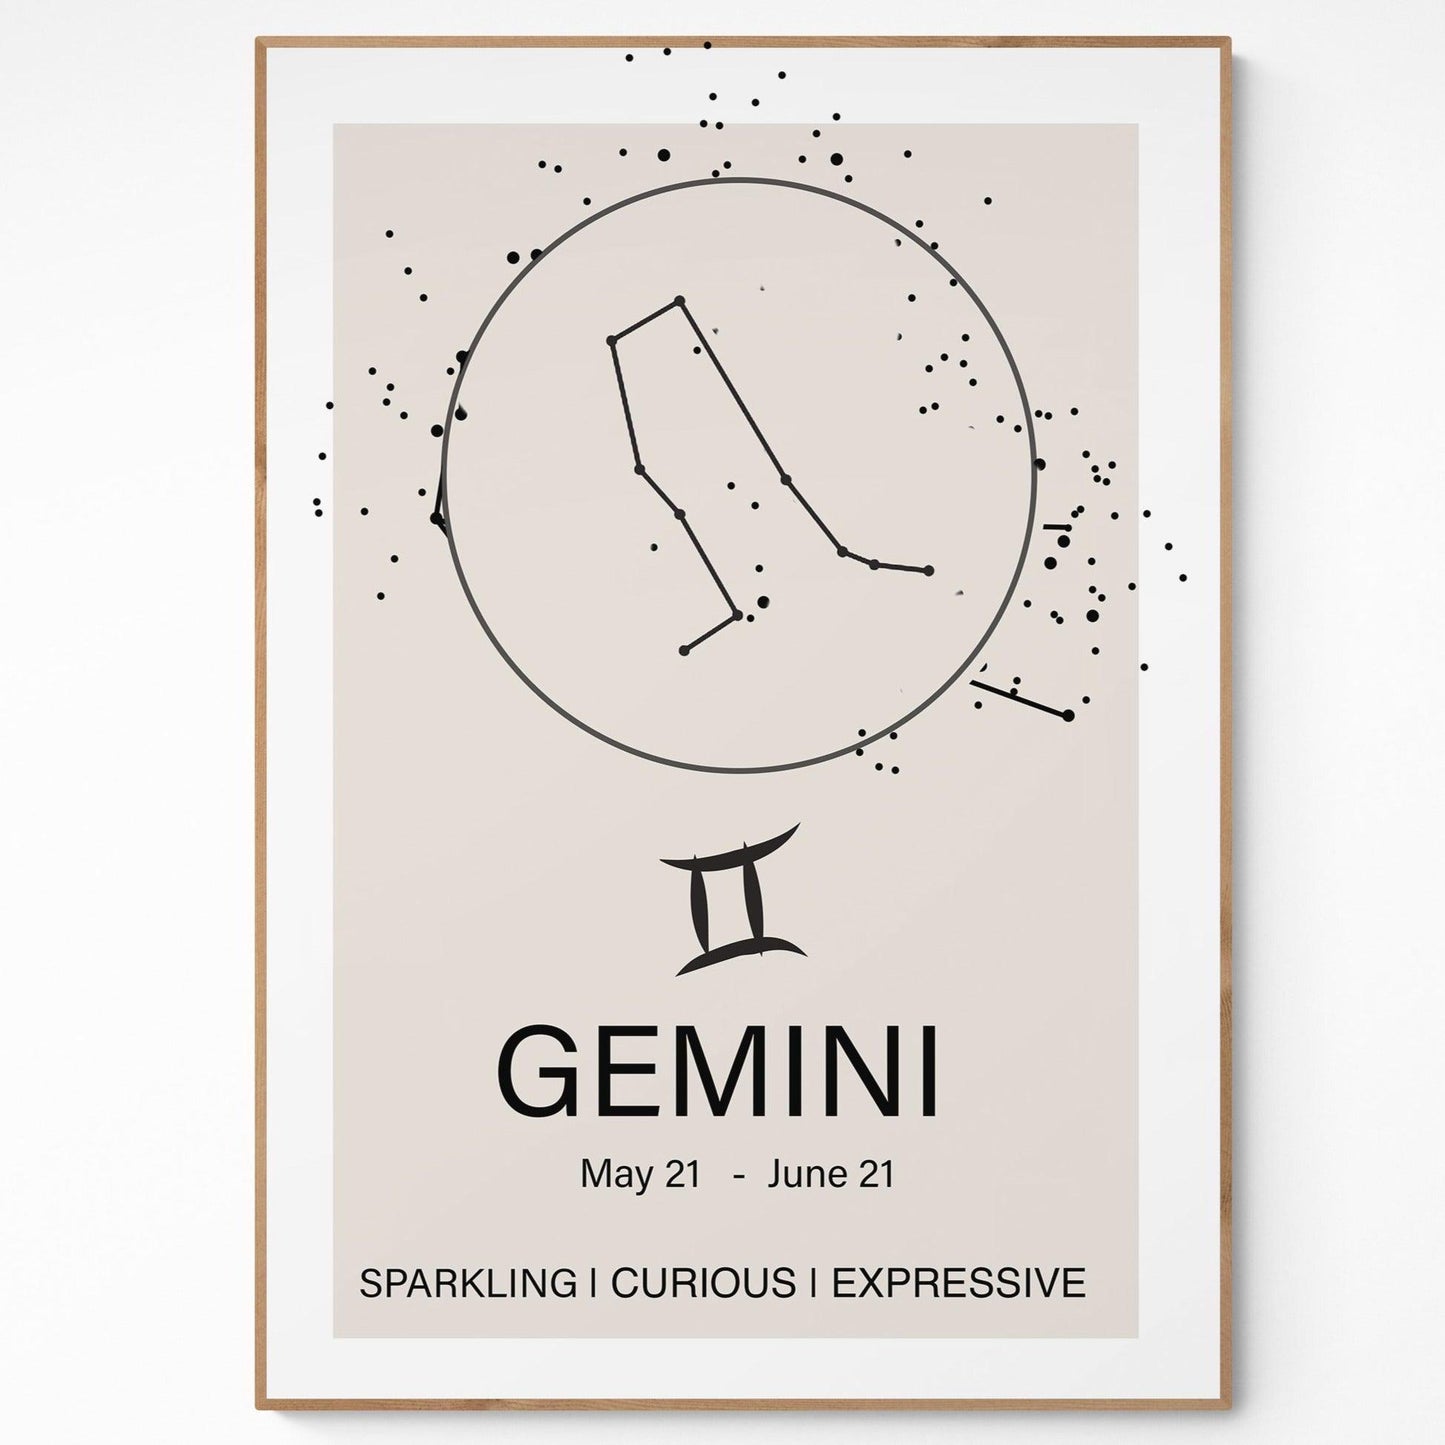 Gemini Constellation Prints Wall Art, Star Sign Print, Zodiac Print, Gemini Sign Present, Constellation Print, Zodiac Wall. ZODIAC SIGNS ART